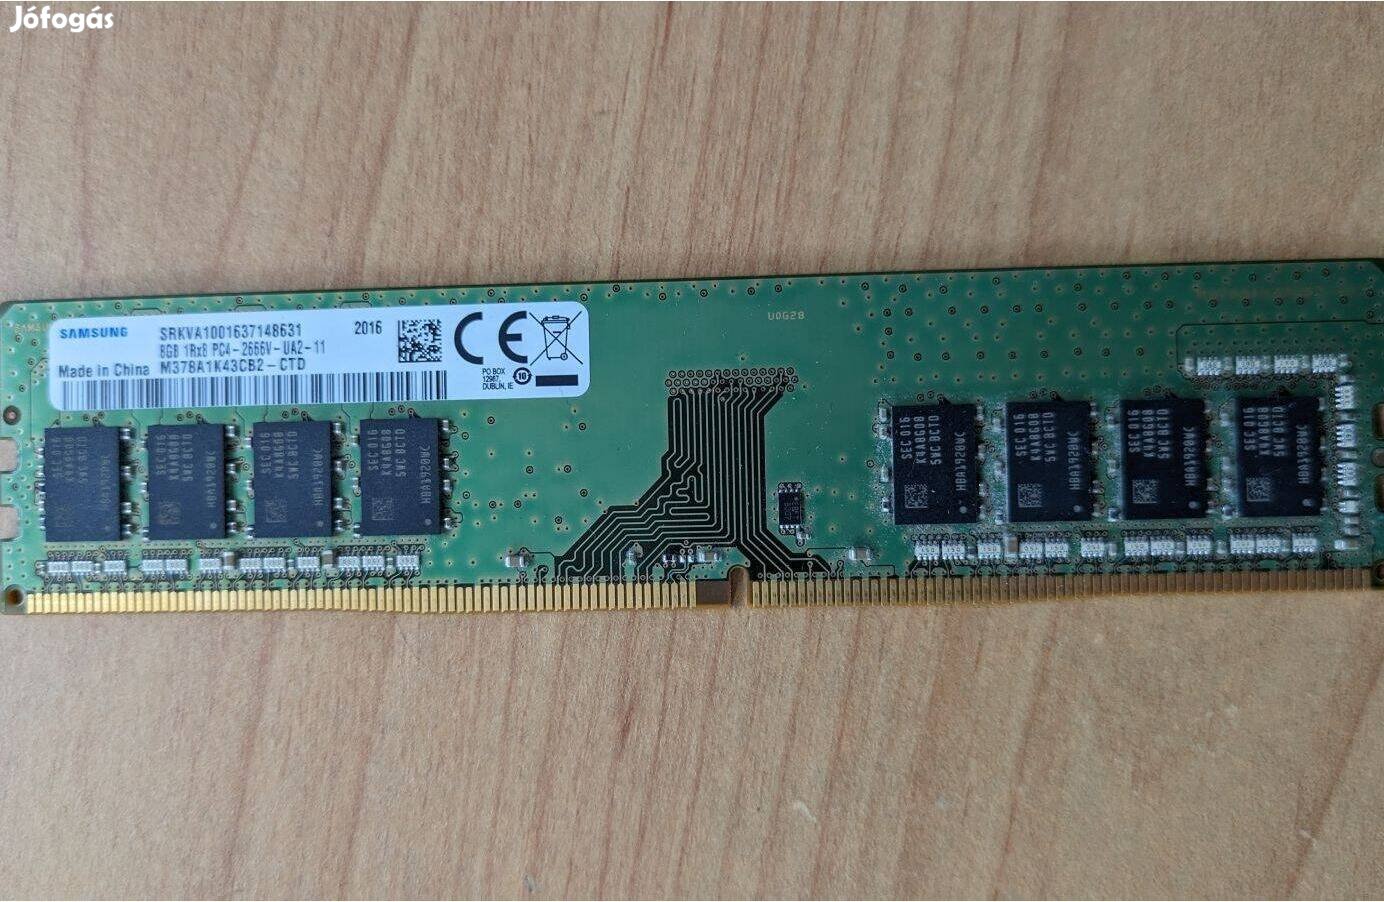 8GB DDR4 Samsung 2666Mhz RAM